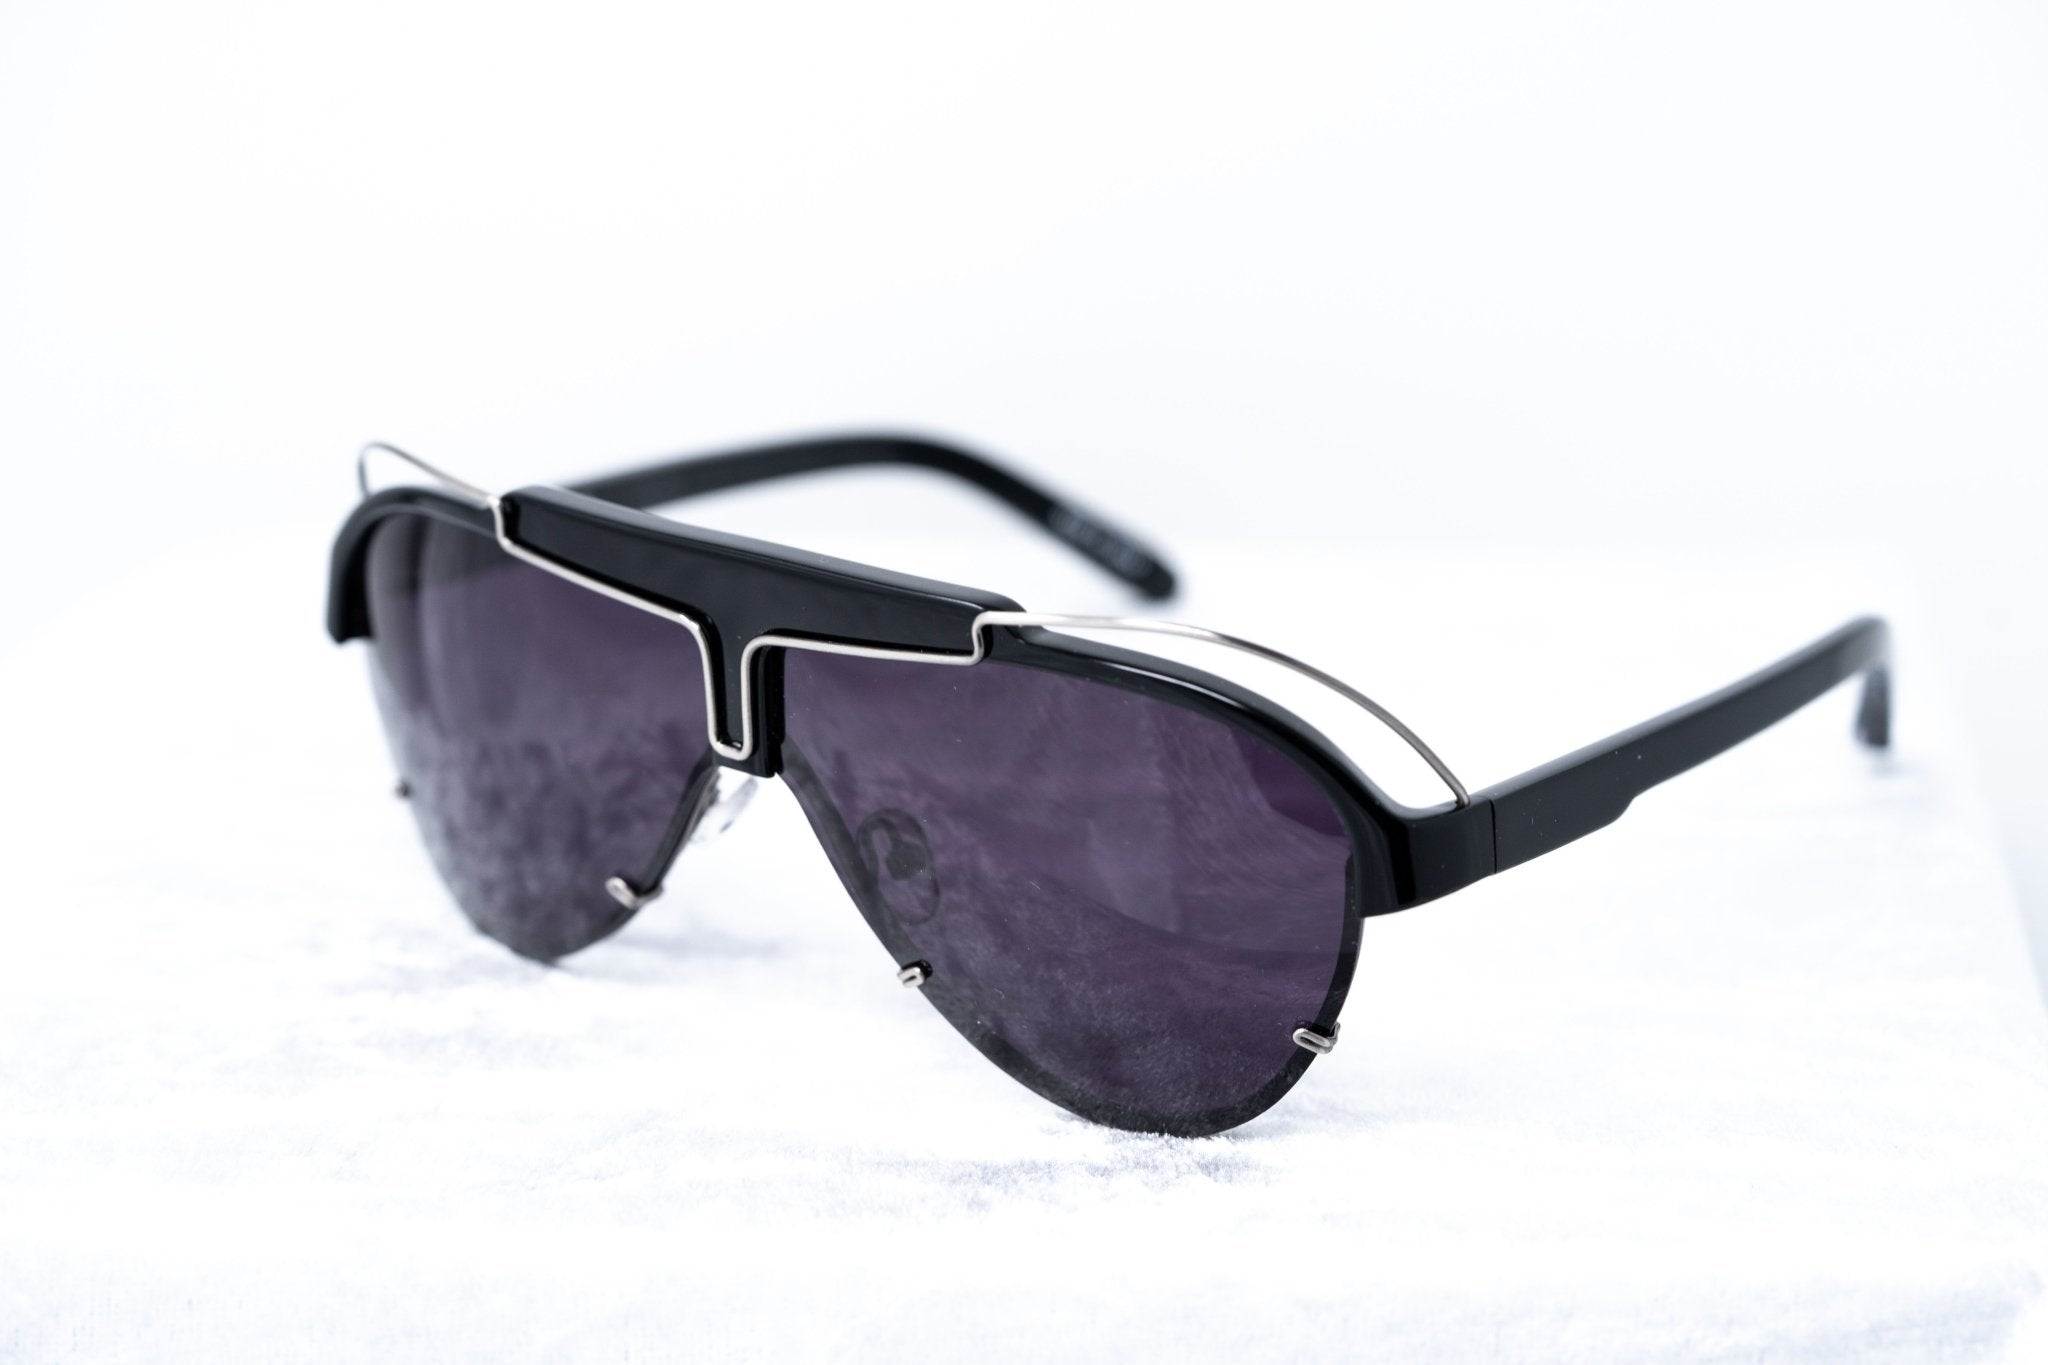 Yohji Yamamoto Unisex Sunglasses Black/Silver and Dark Purple Lenses Category 4 - YY11ASTRONAUTC2SUN - Watches & Crystals